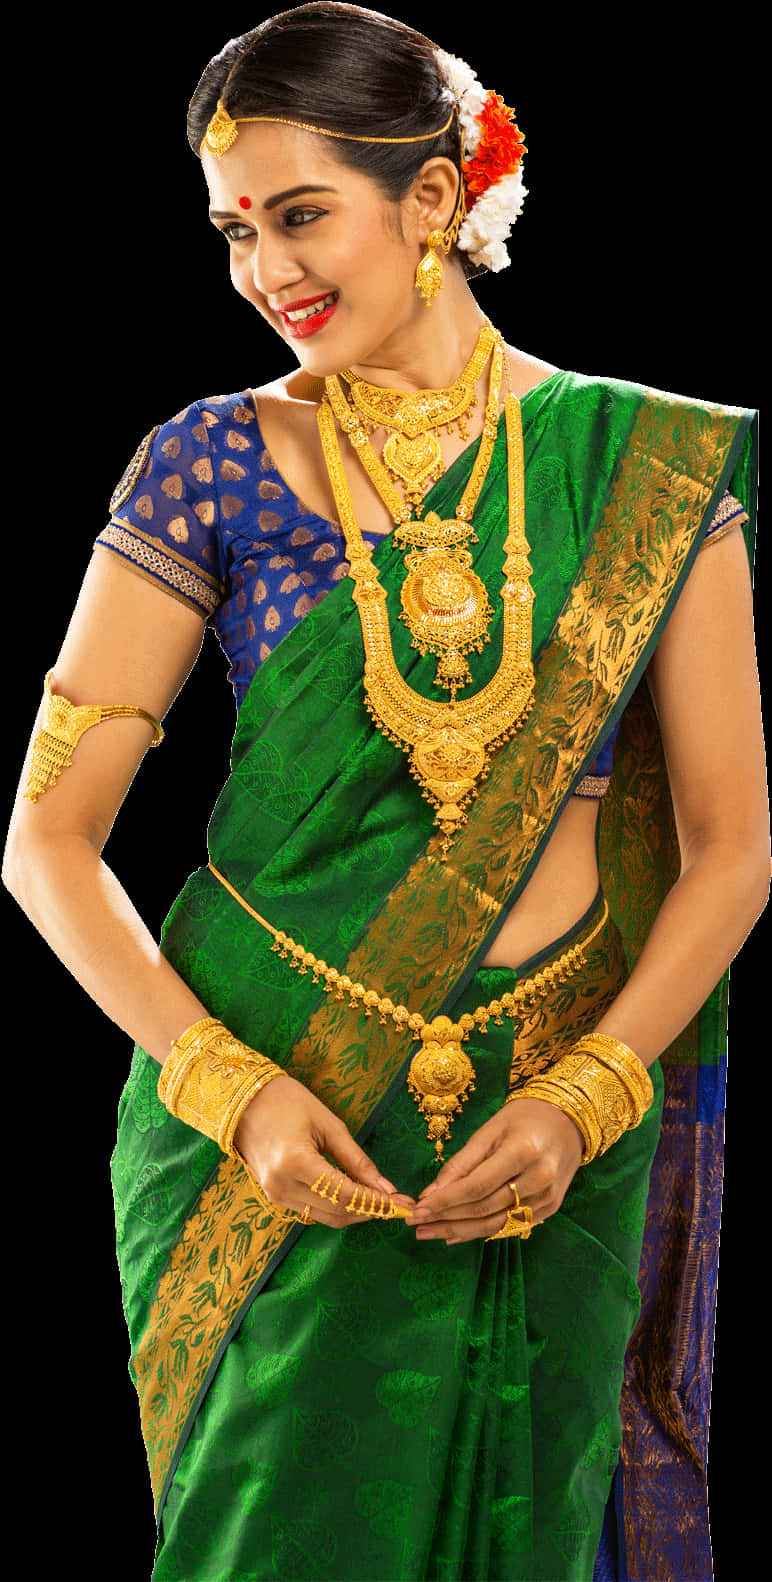 A Woman Wearing A Green And Gold Sari